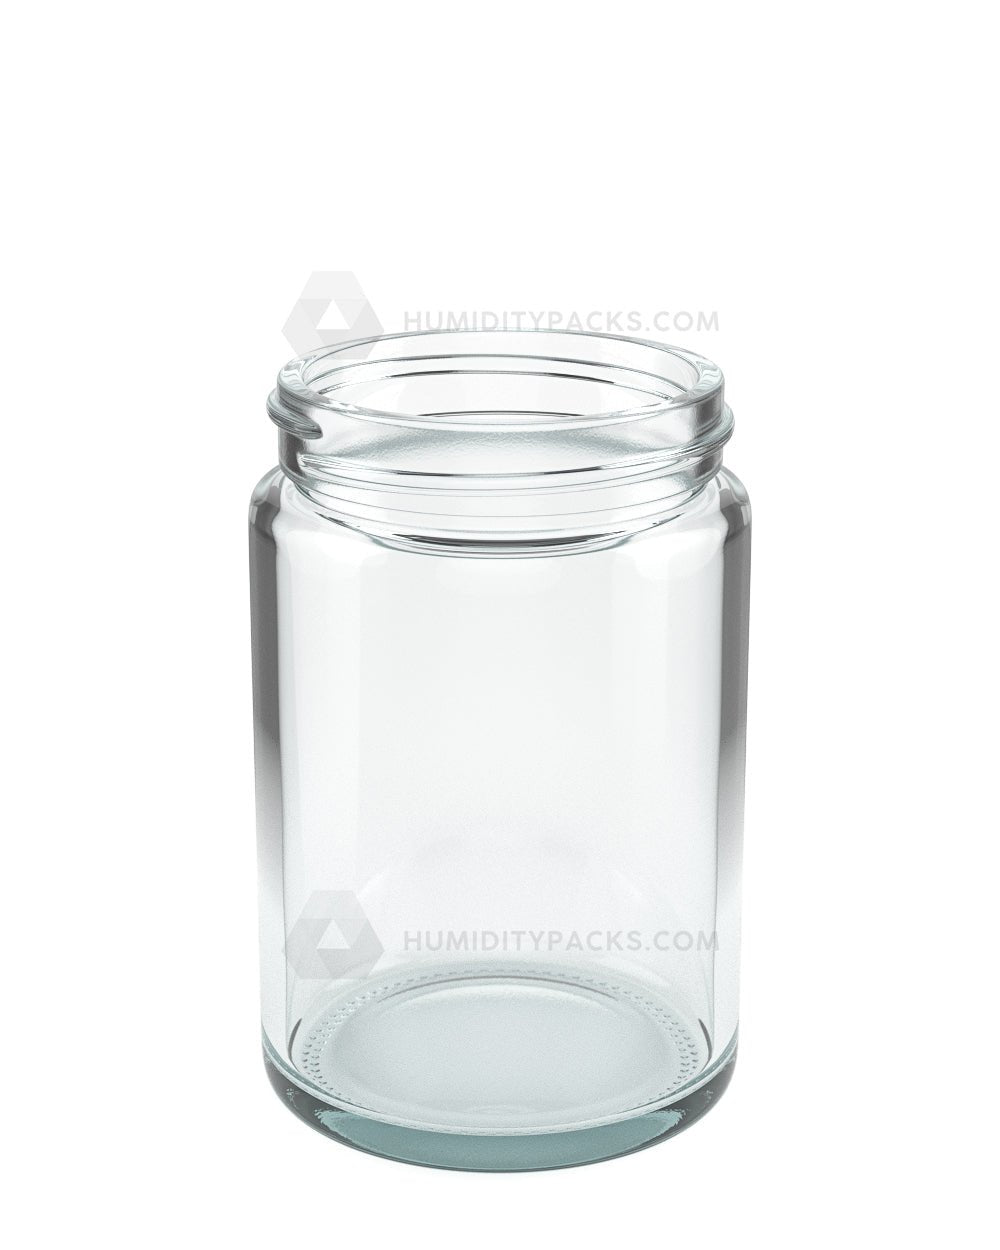 50mm Straight Sided Clear 5oz Glass Jar 100/Box Humidity Packs - 2